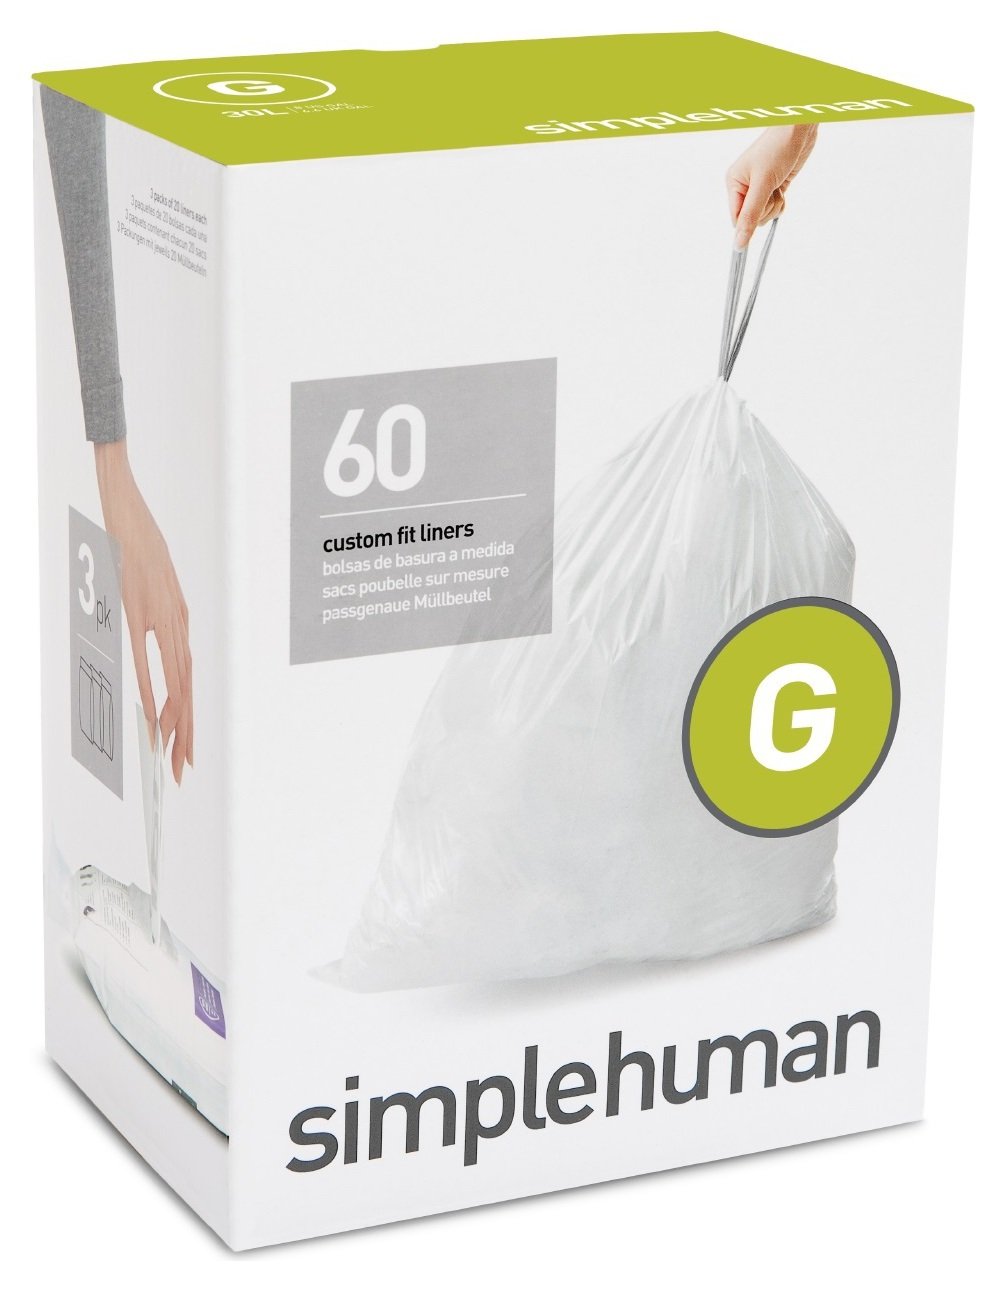 simplehuman Code G Bin Liners - Pack of 60